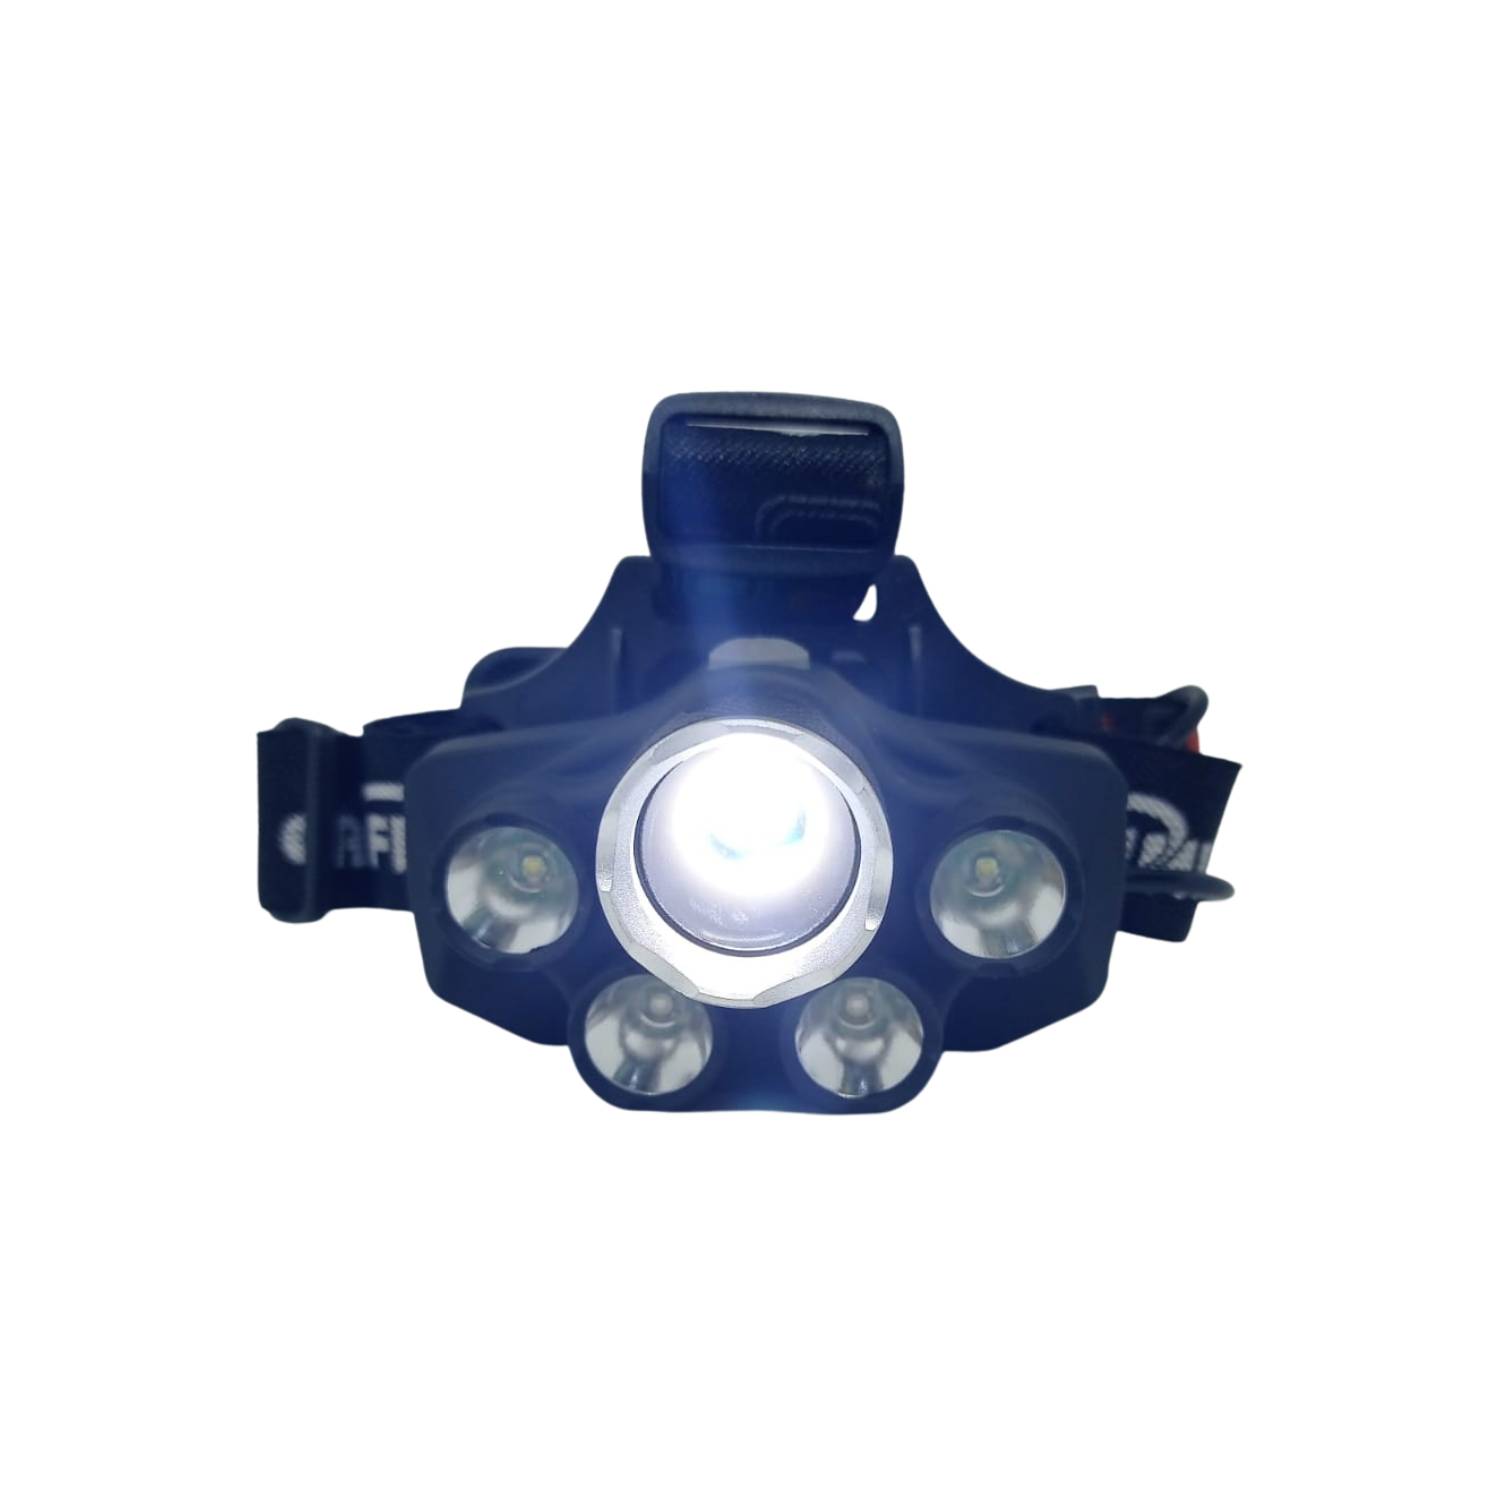 Linterna Frontal 5 Leds Recargable Multifuncional Luz Azul 7627C-5 CAFINI